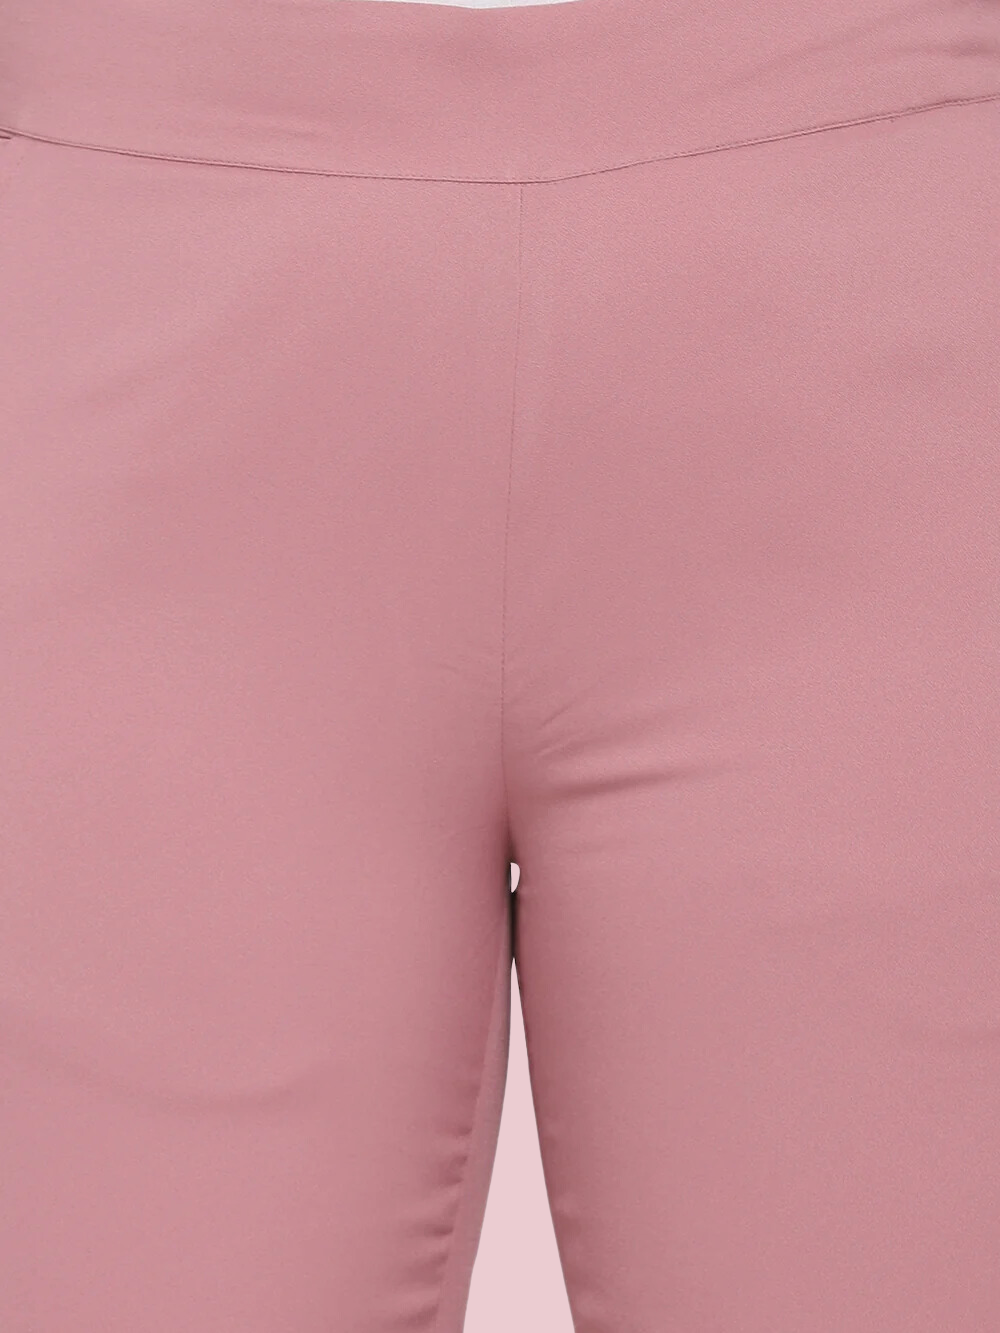 Poly Crepe Pink Trousers- Women's Office Wear